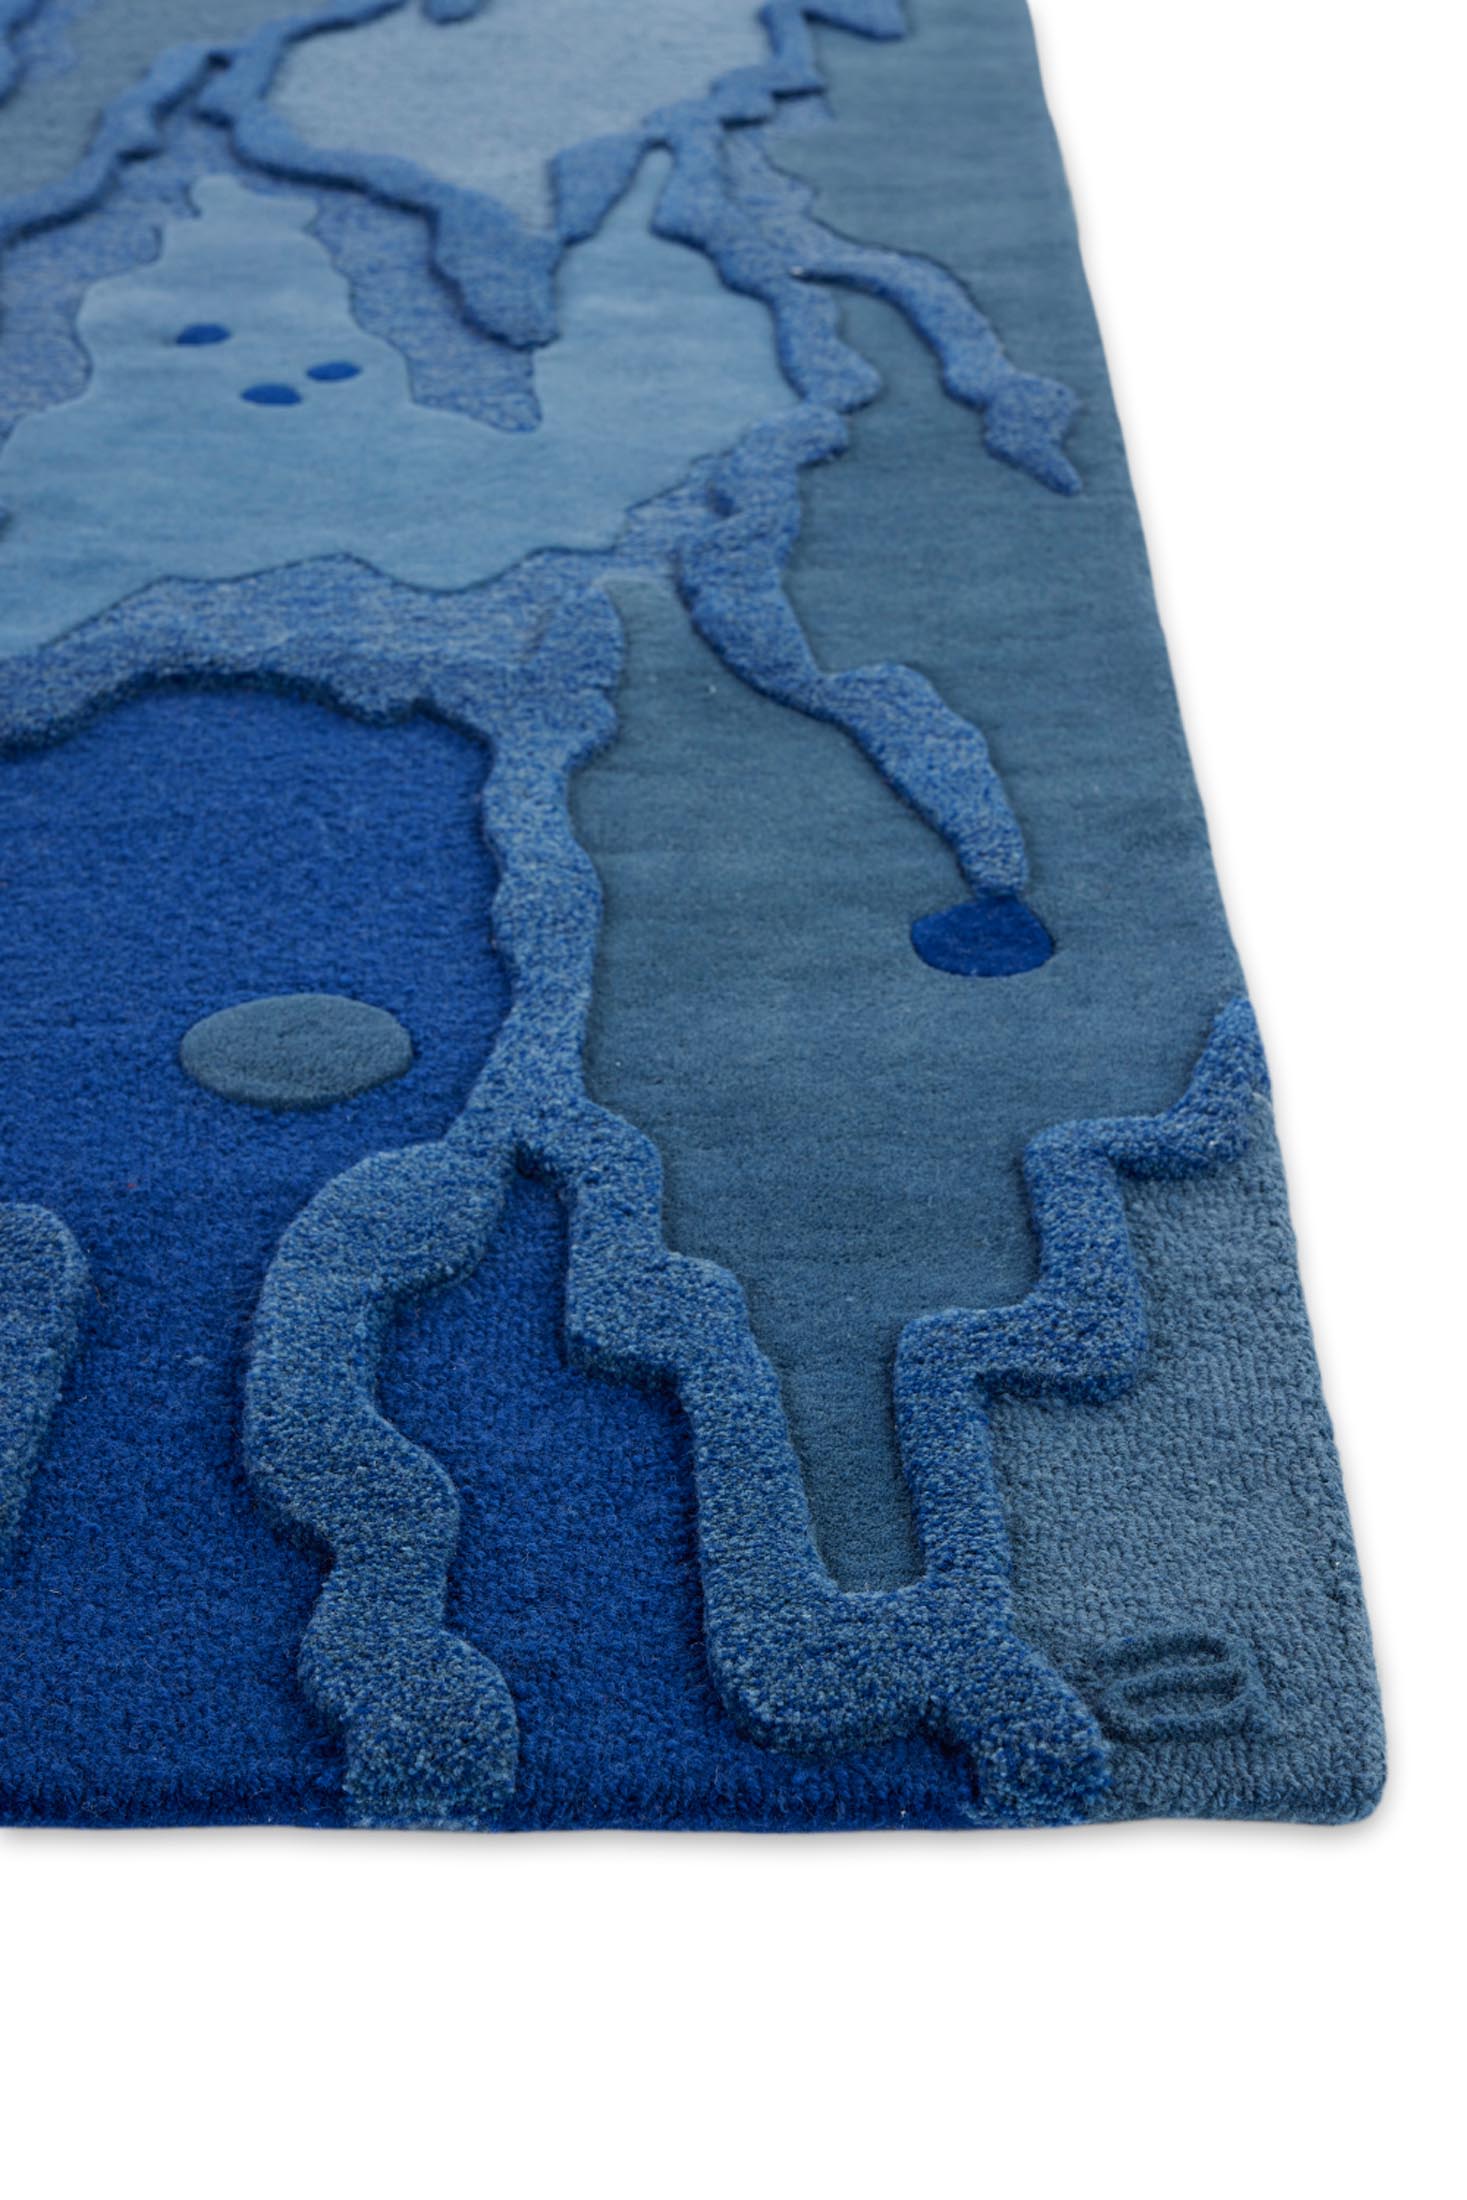 angela adams Ocean Navy rug contemporary modern